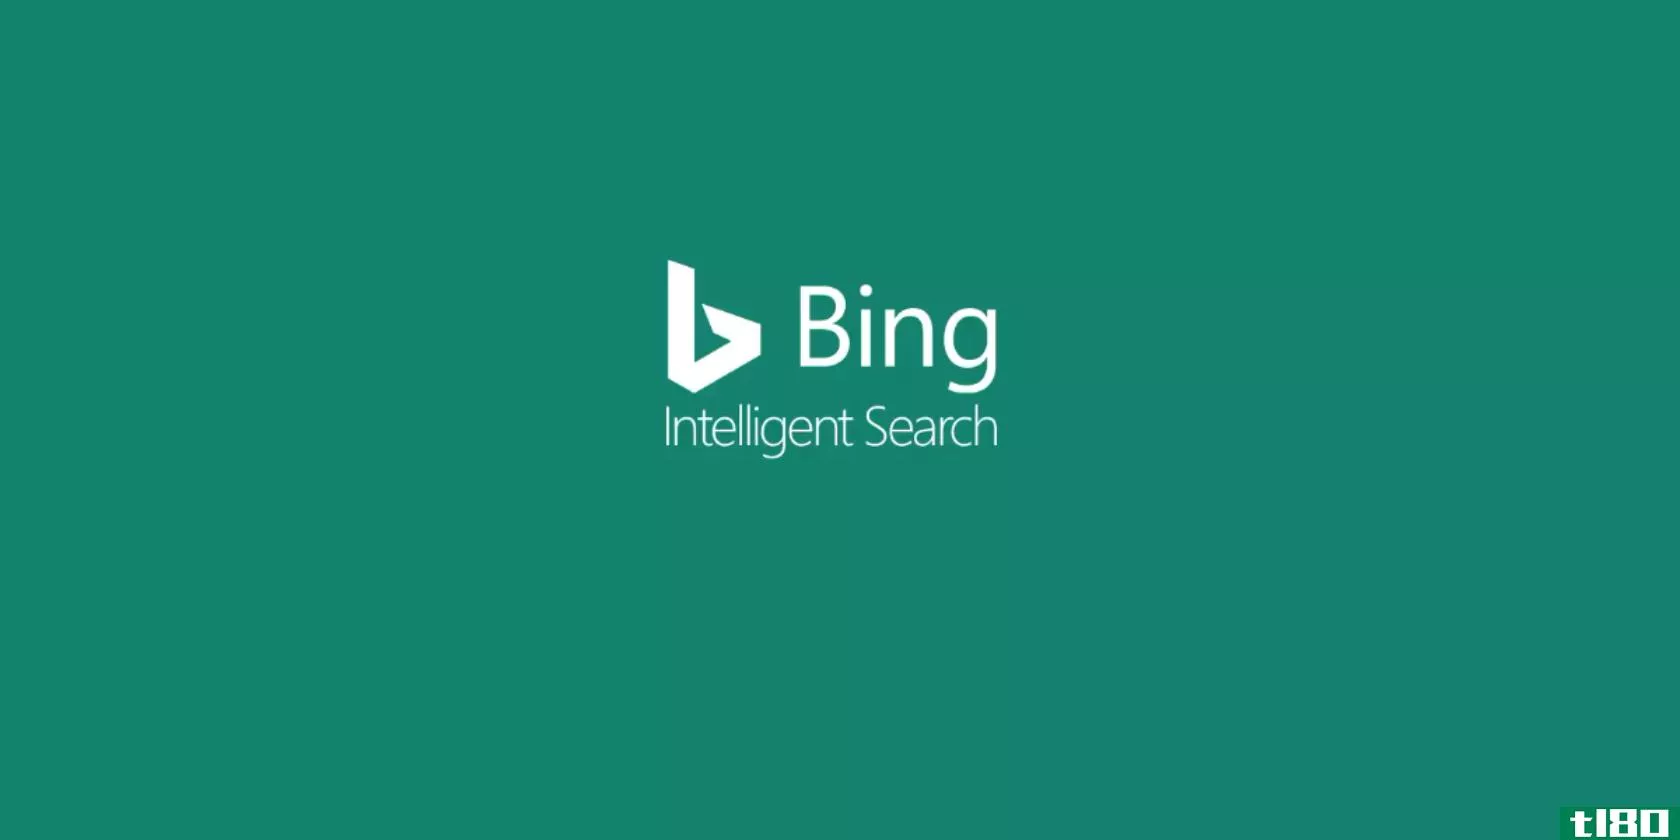 bing-intelligent-search-logo